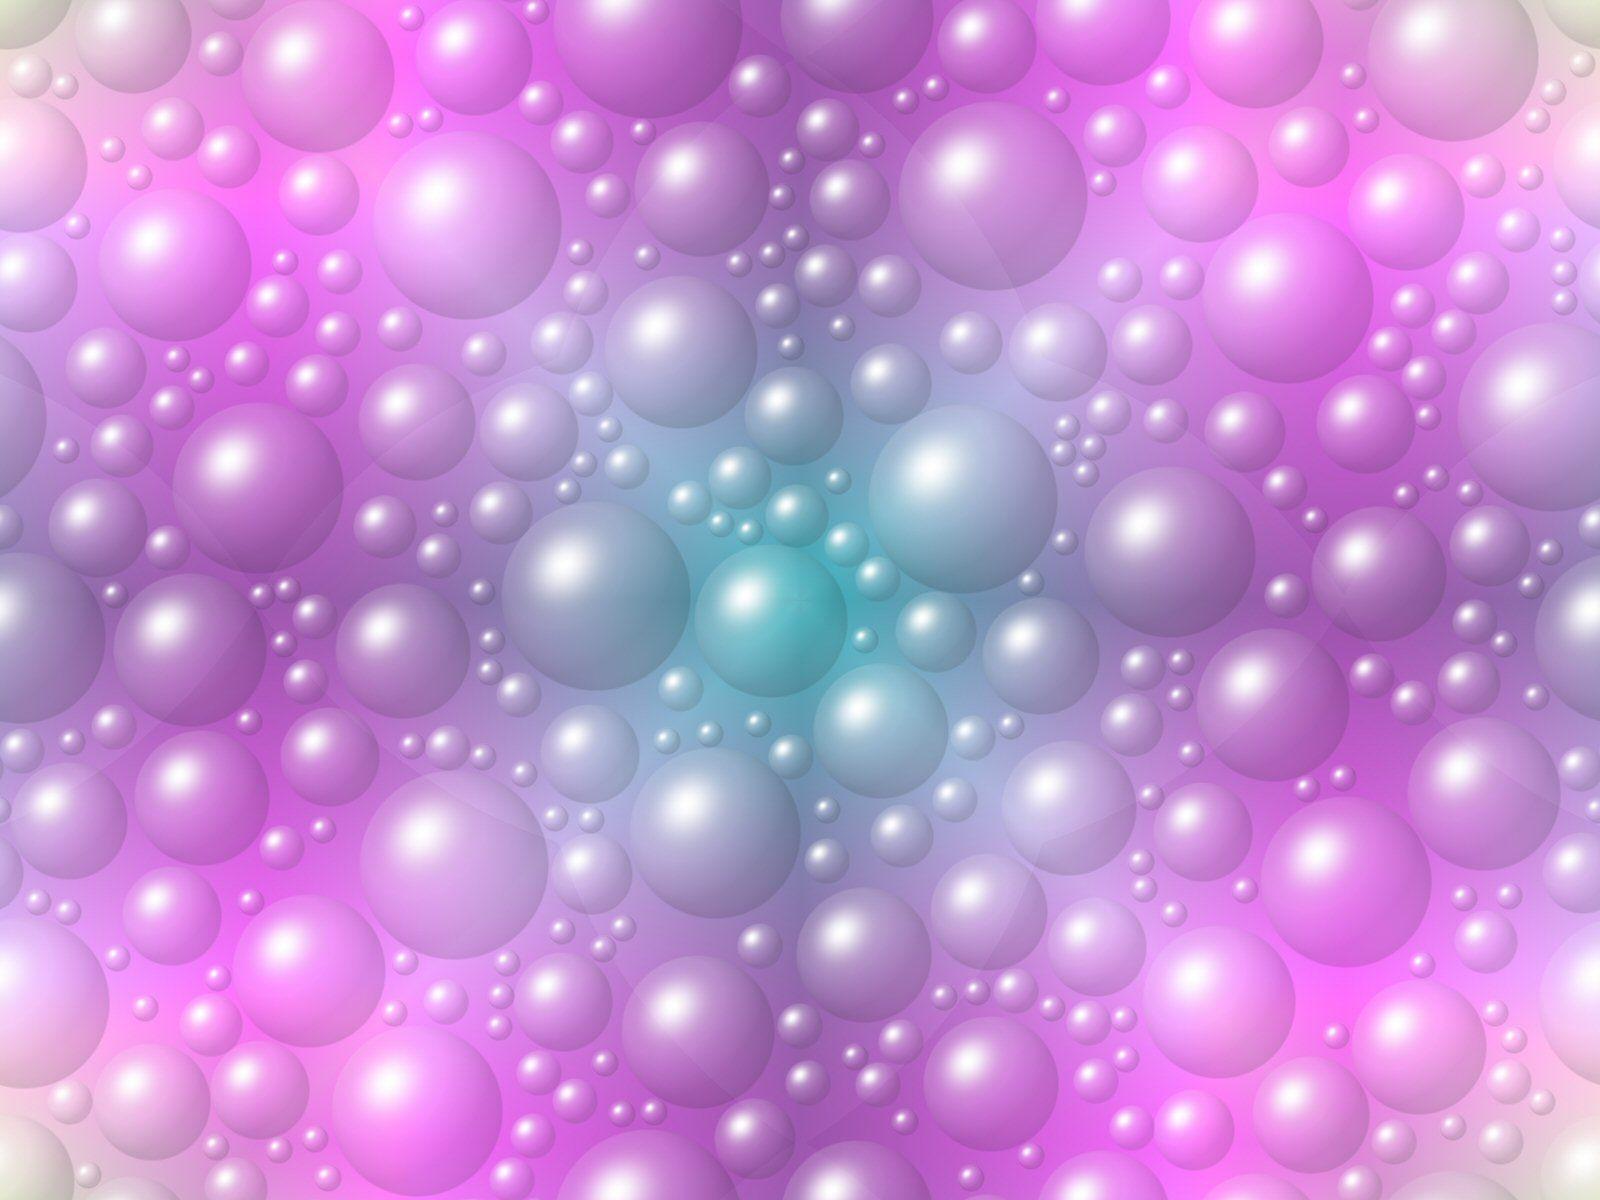 Bubble Wallpaper For Desktop · Bubble Wallpaper. Best Desktop